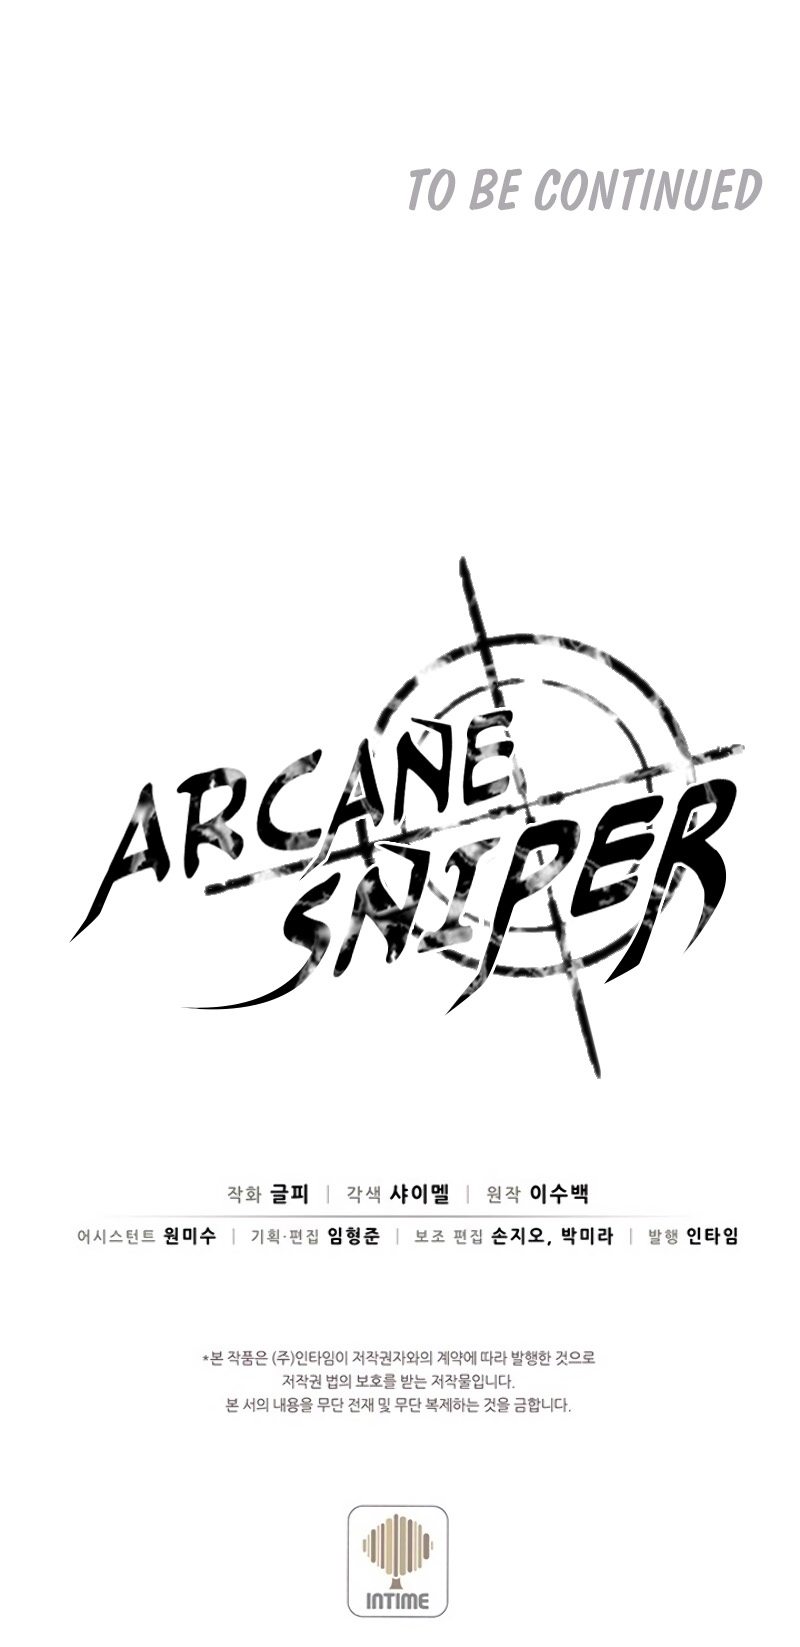 Arcane Sniperตอนที่ 11 (64)